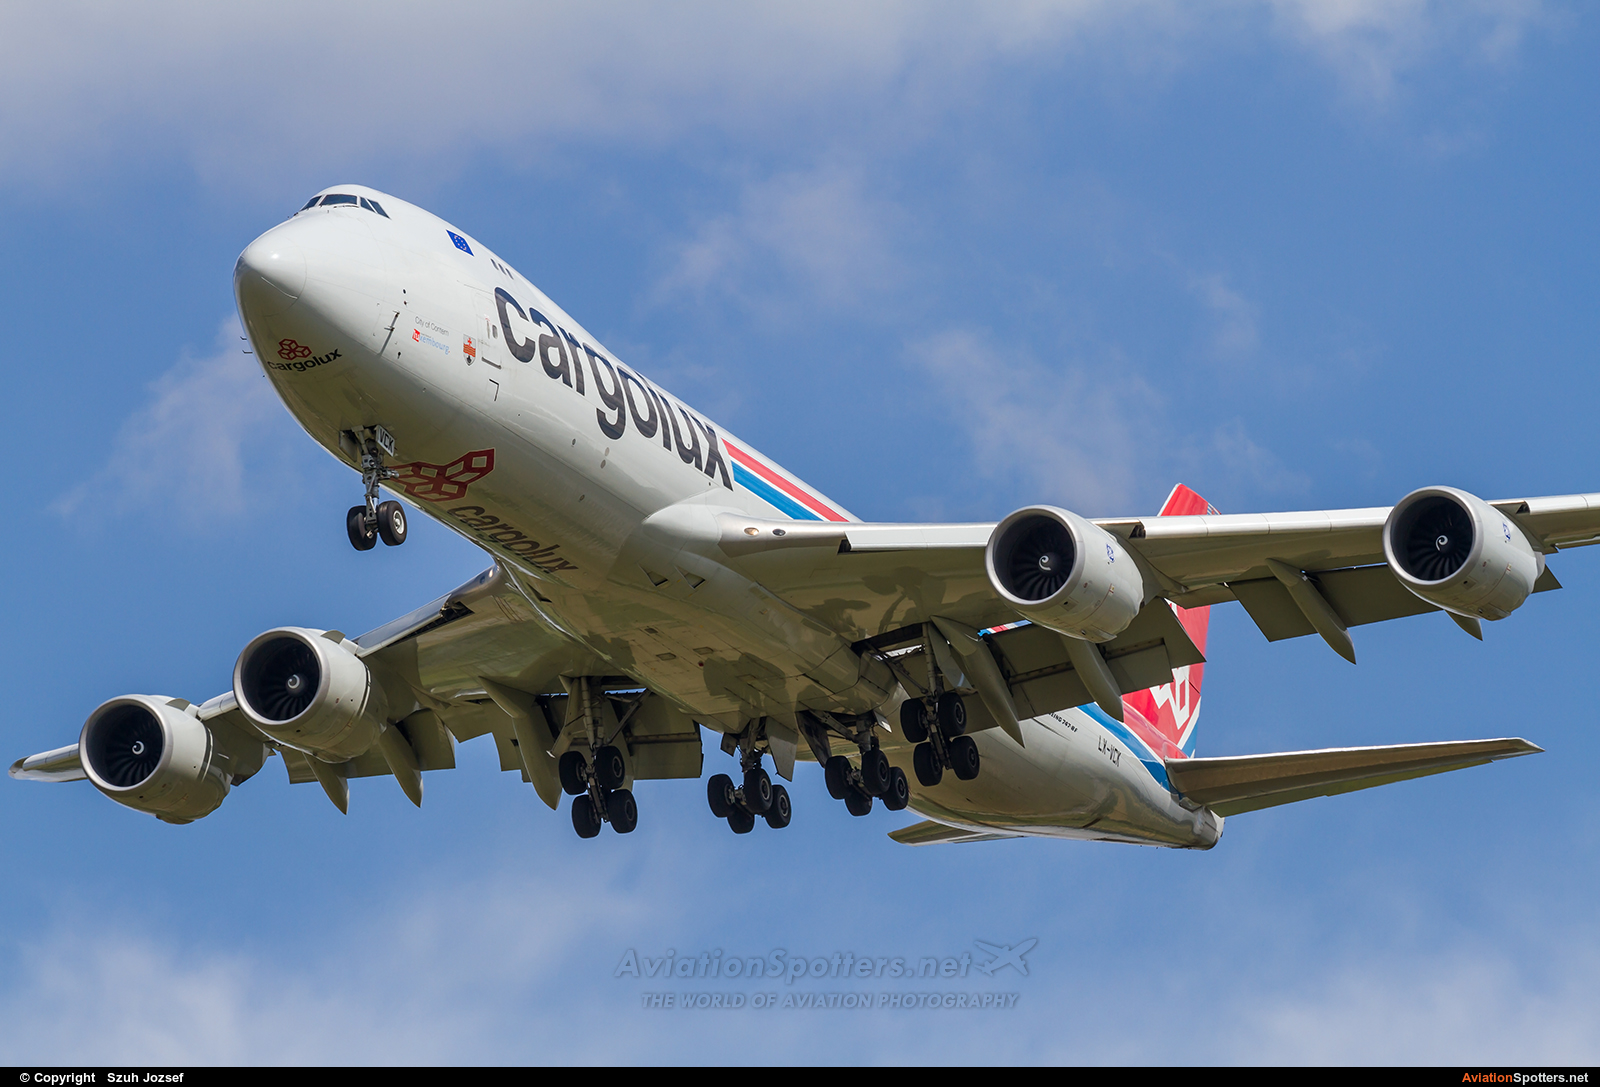 Cargolux  -  747-8F  (LX-VCK) By Szuh Jozsef (szuh jozsef)